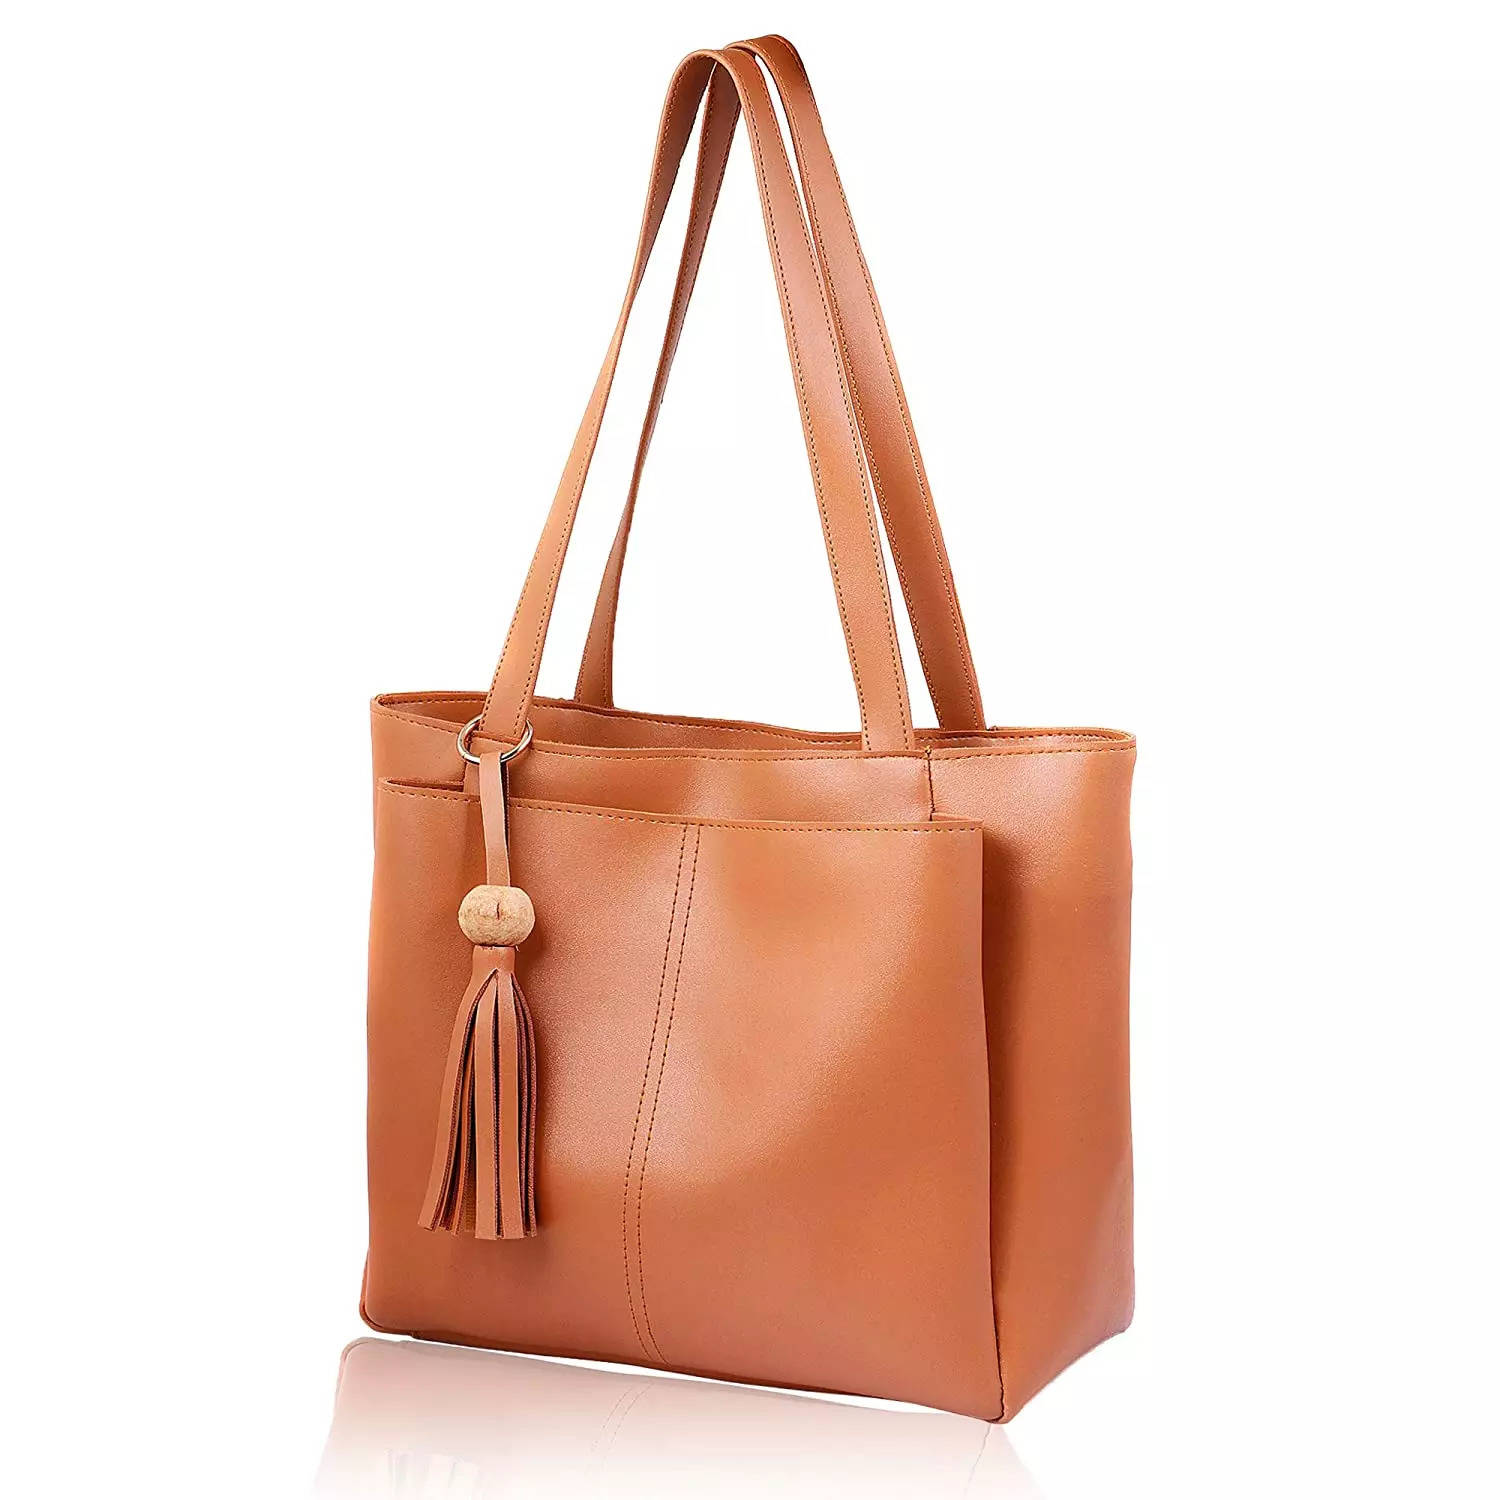 Ladies handbags: Premium Handbags For Women - The Economic Times